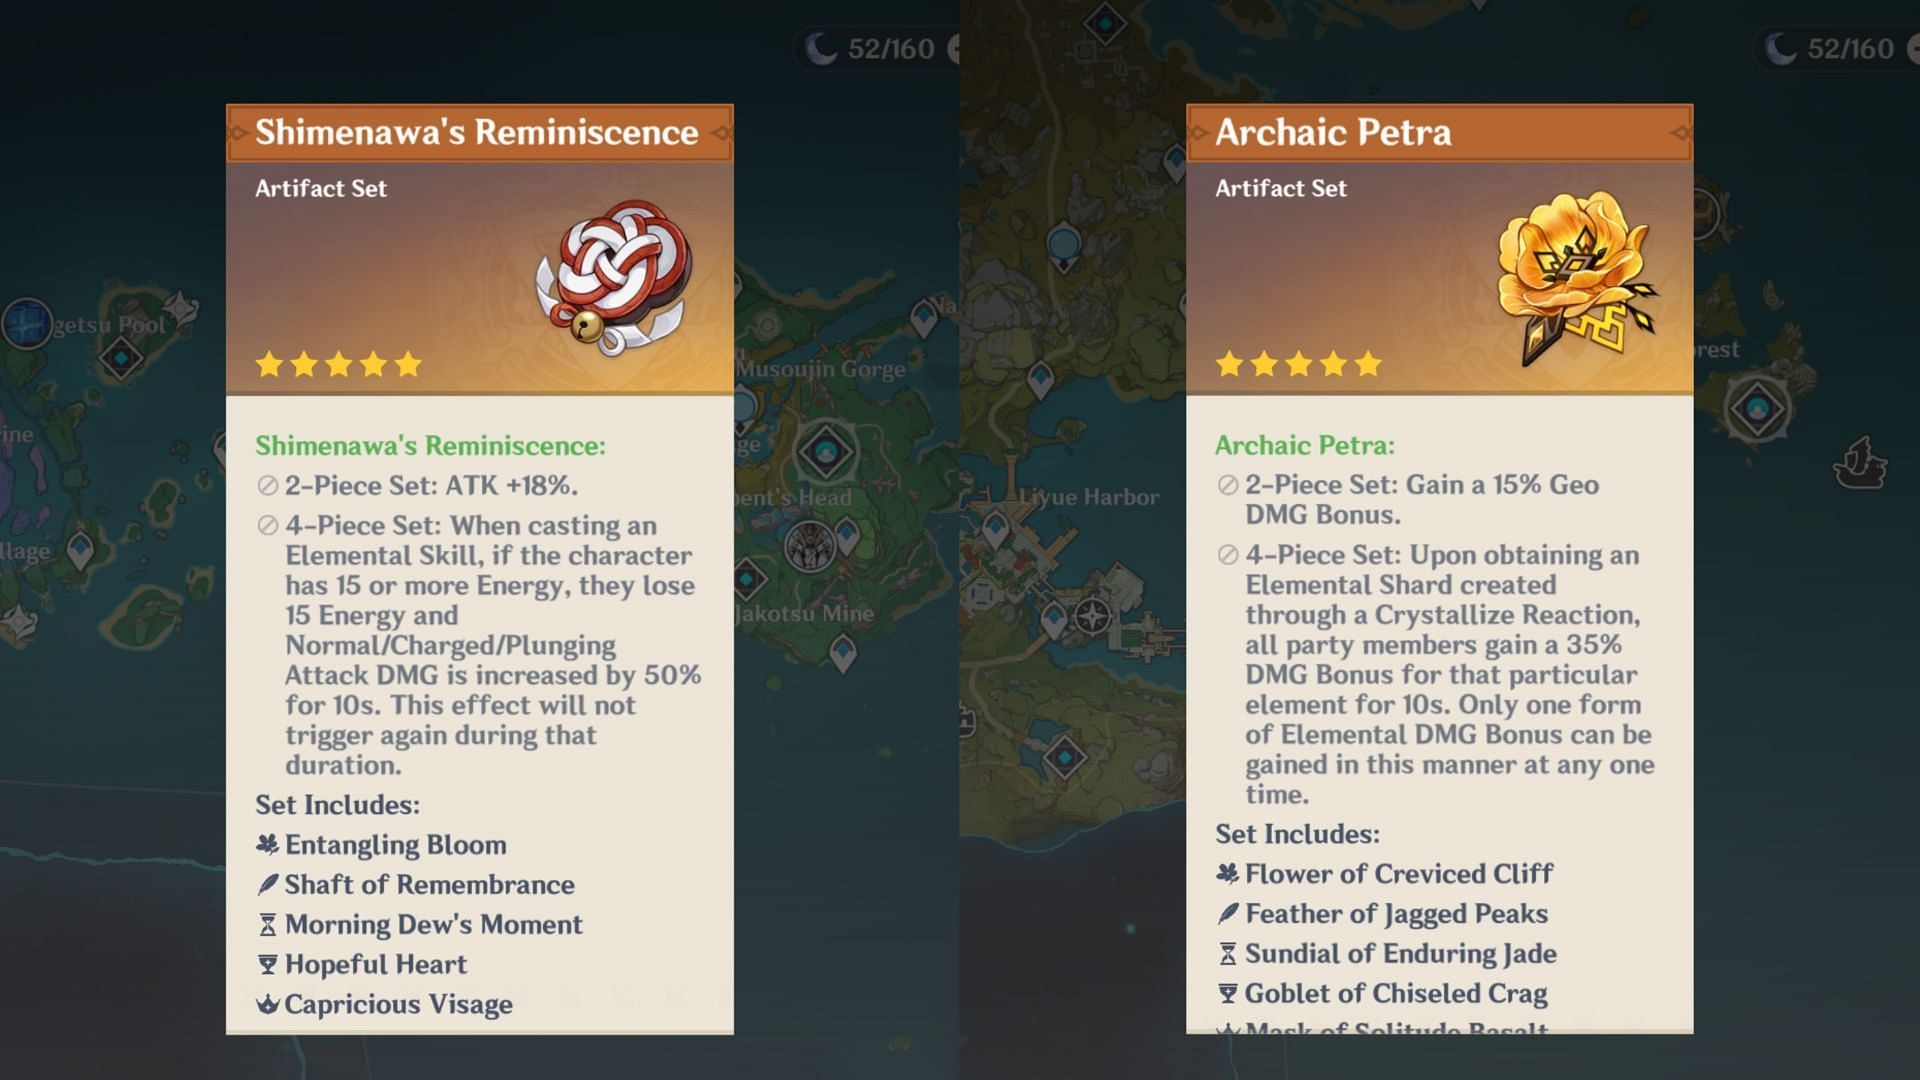 ATK%-Set und Archaic Petra Genshin Impact 4.3 Navia Build Guide: Beste Artefakte, Waffen, Team-Comps